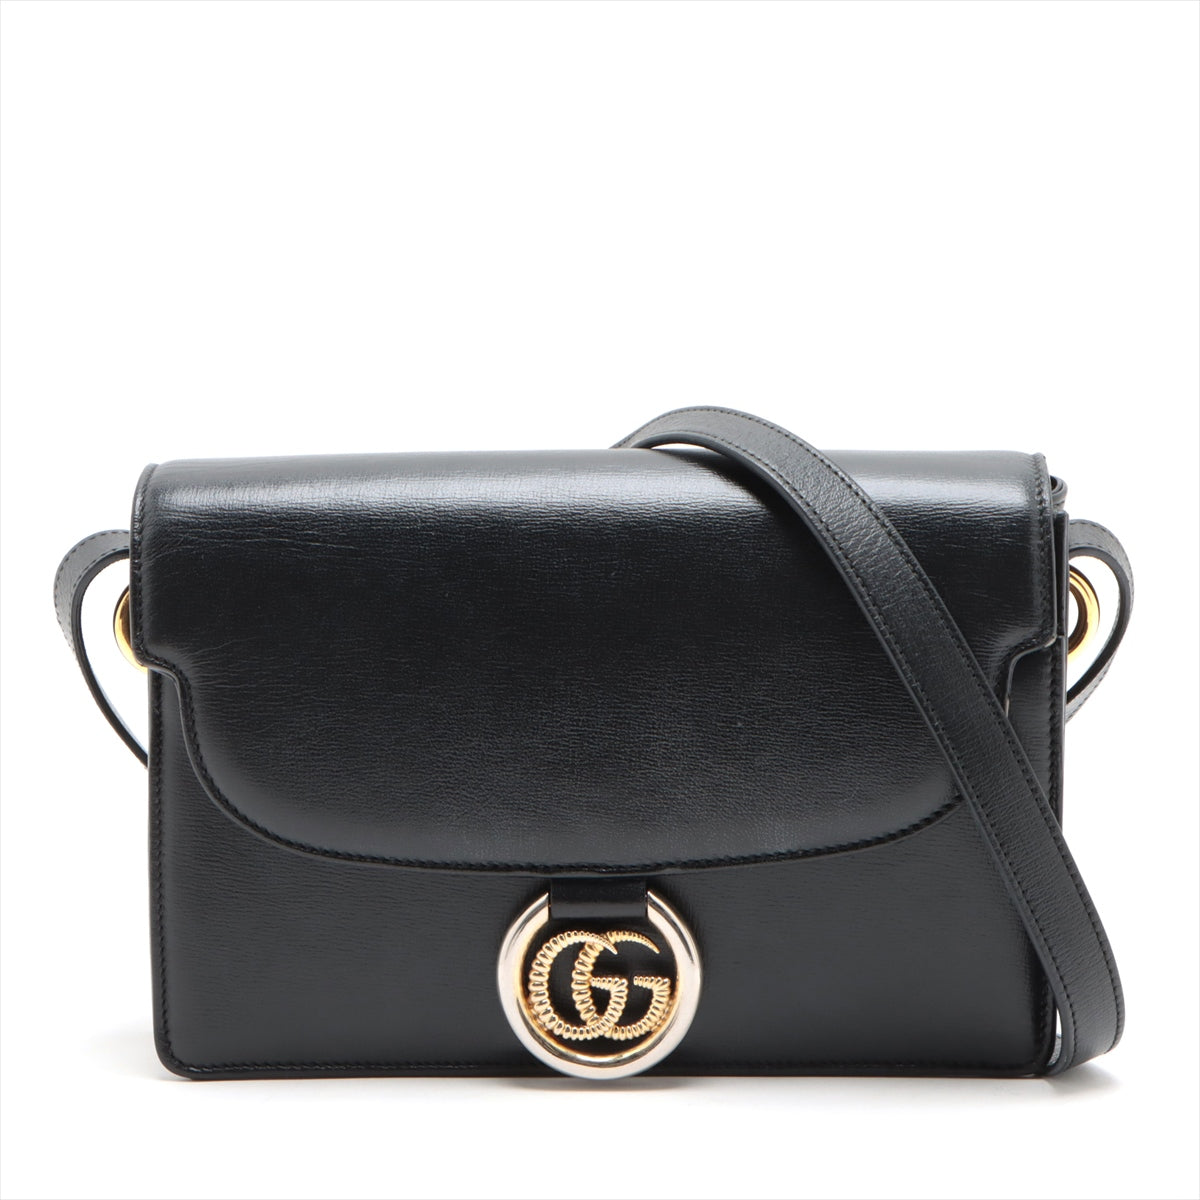 Gucci Double G Leather Shoulder bag Black 589474